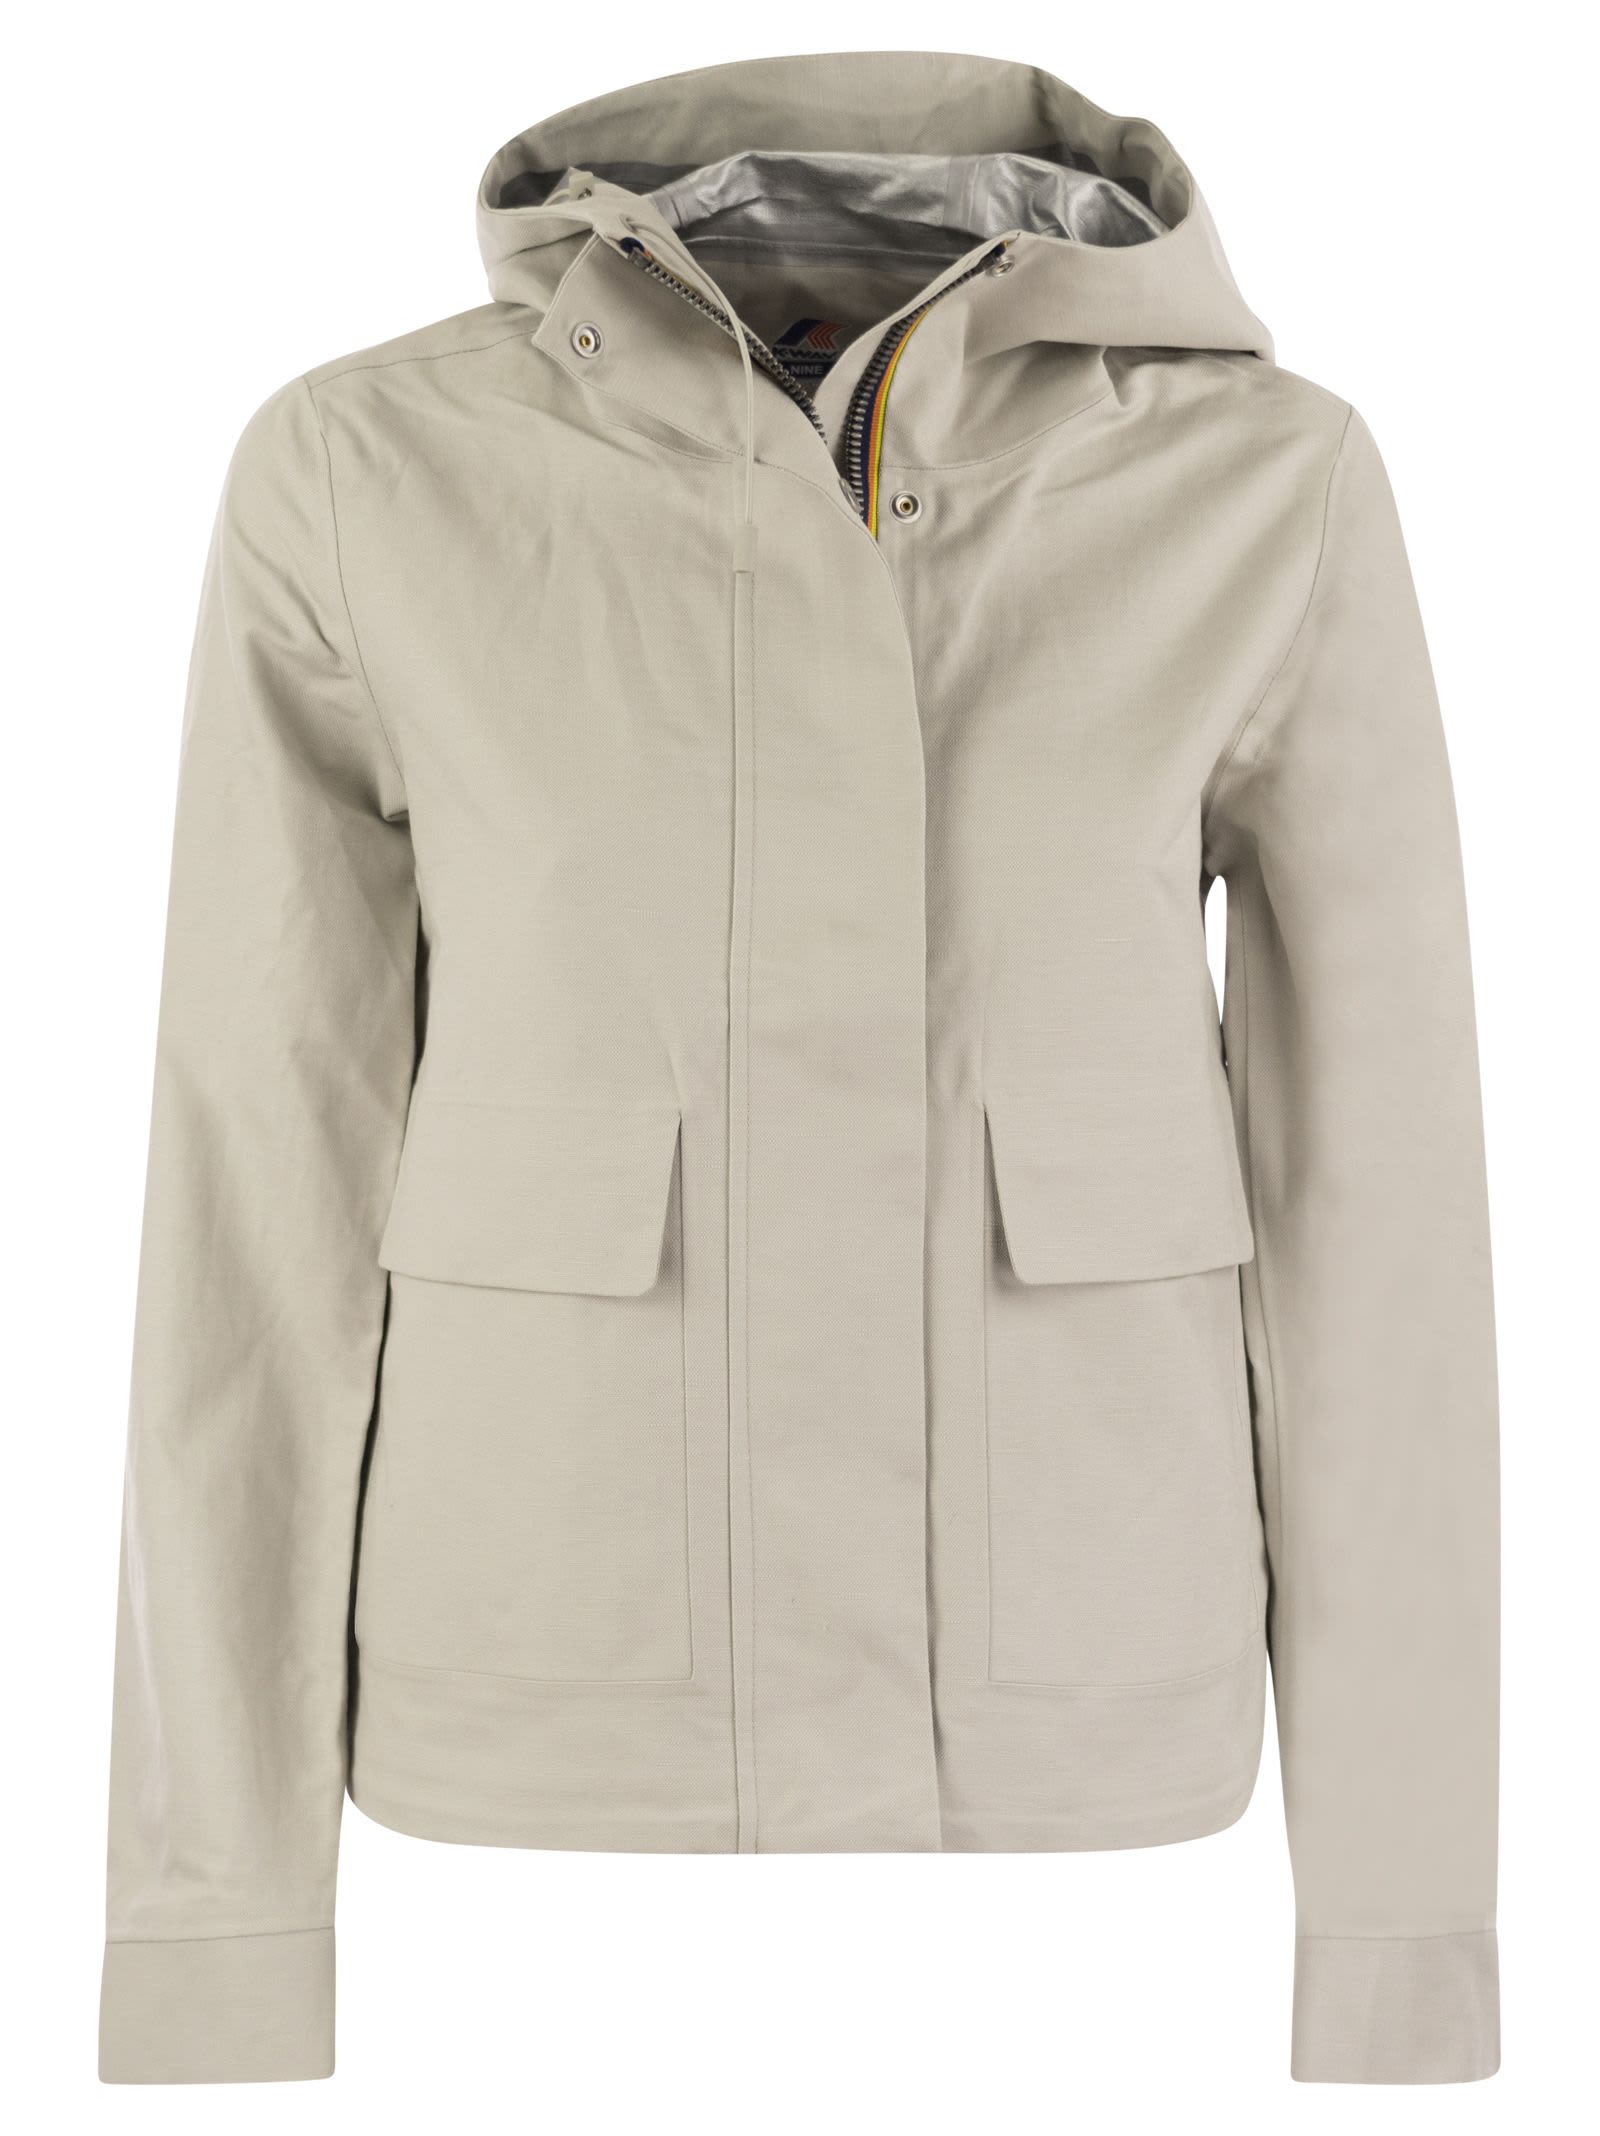 Sarthe - Hooded Jacket